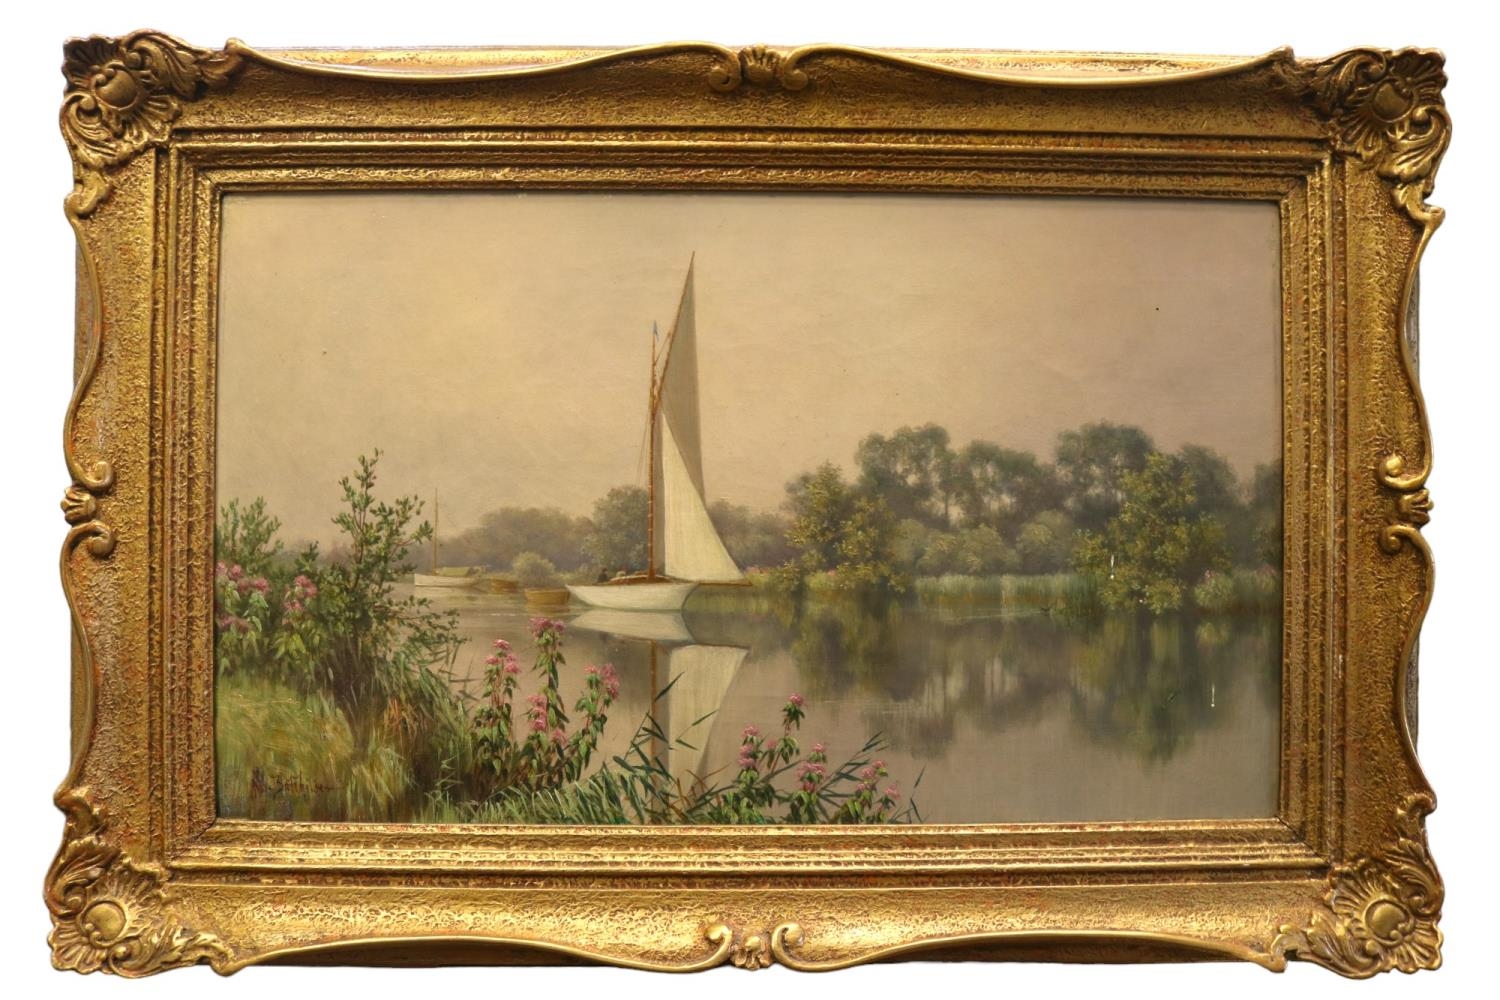 Stephen John Batchelder (British, 1849-1932) . Oil on canvas of Sailing Norfolk boats in river scene